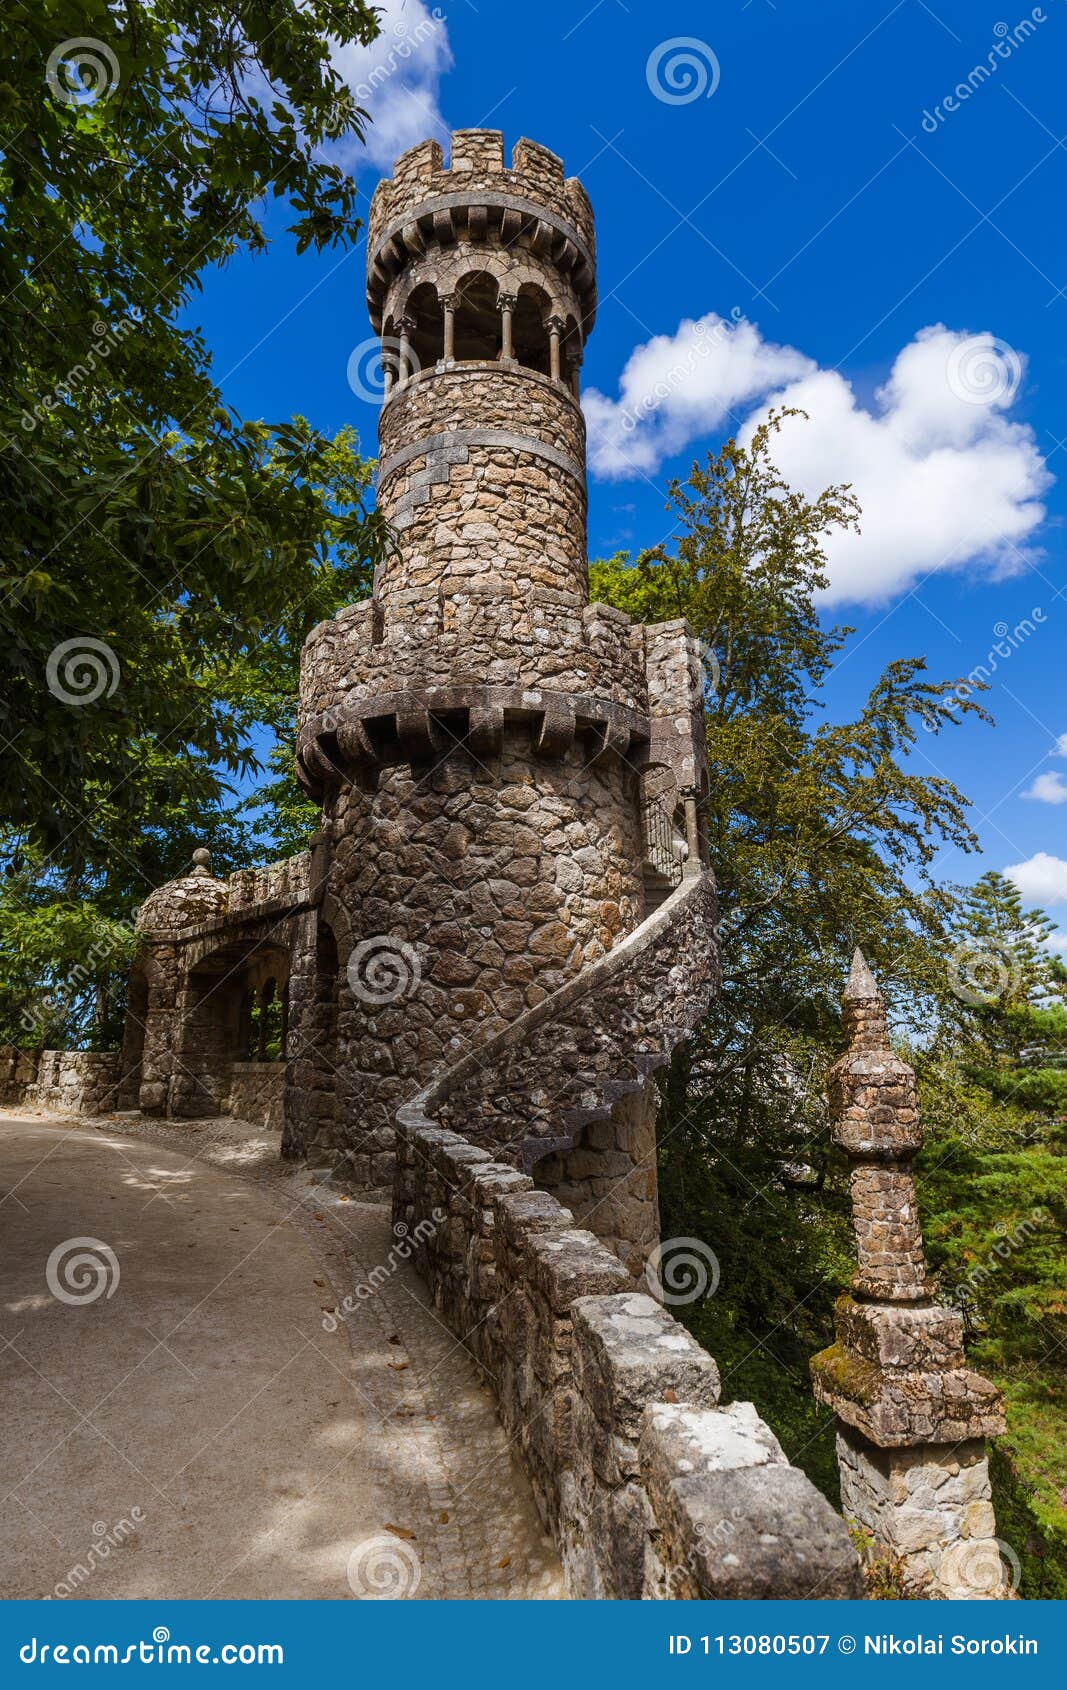 castle quinta da regaleira - sintra portugal